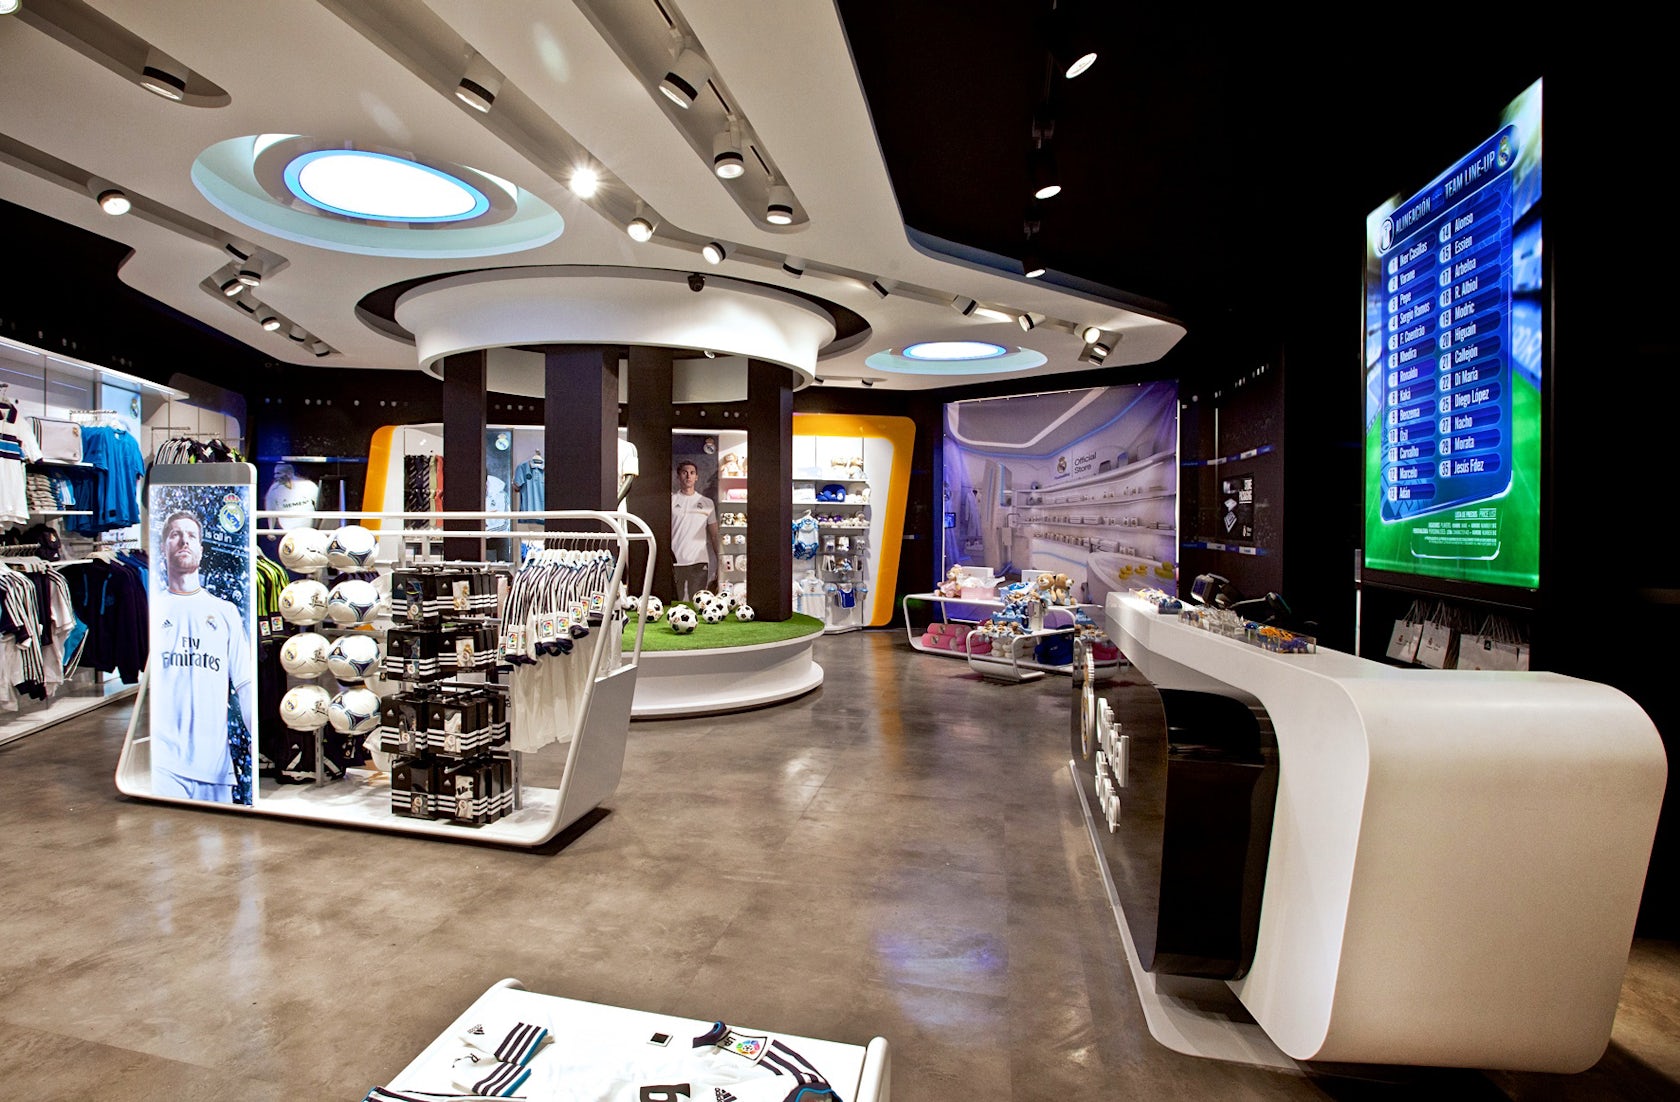 Real Madrid Official Store, Gran Vía 31 - Architizer